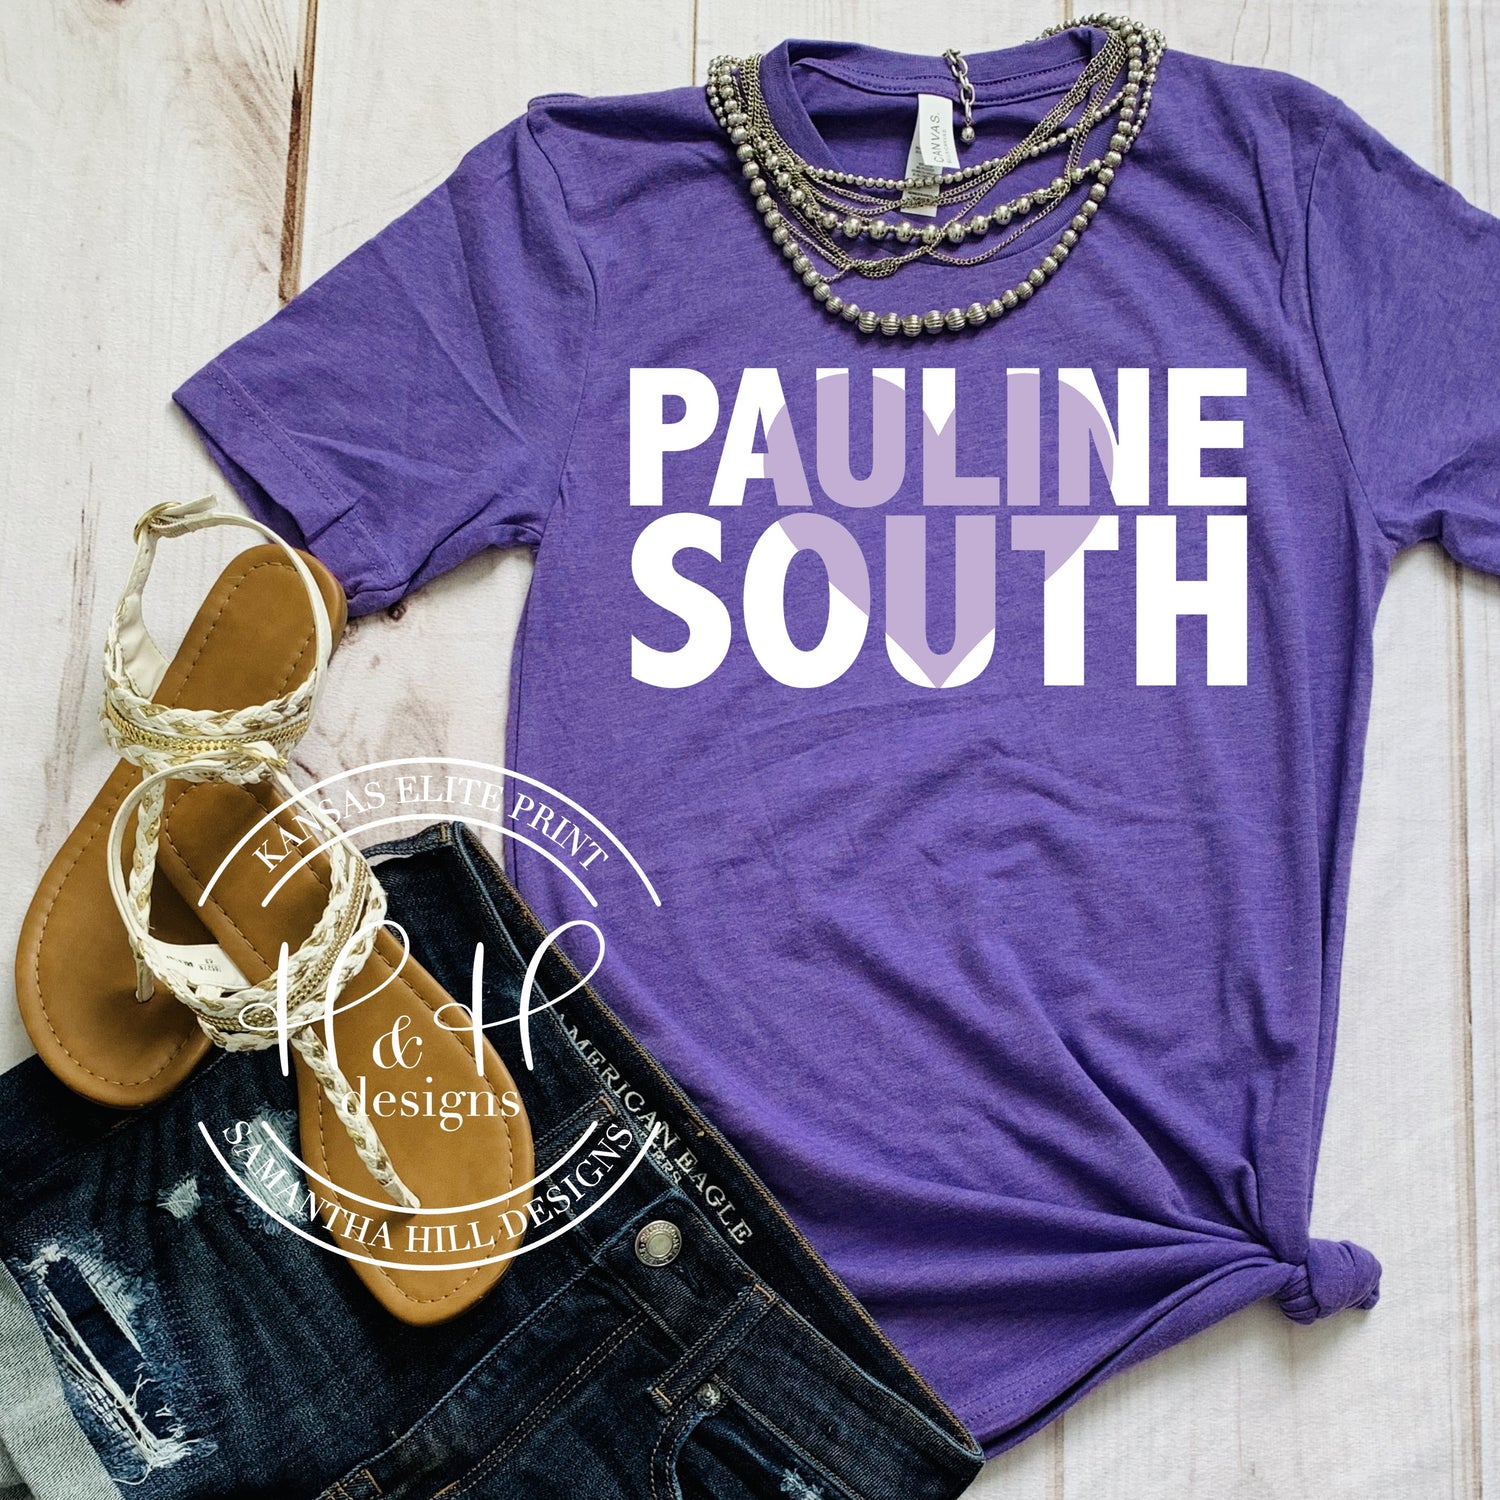 Pauline South